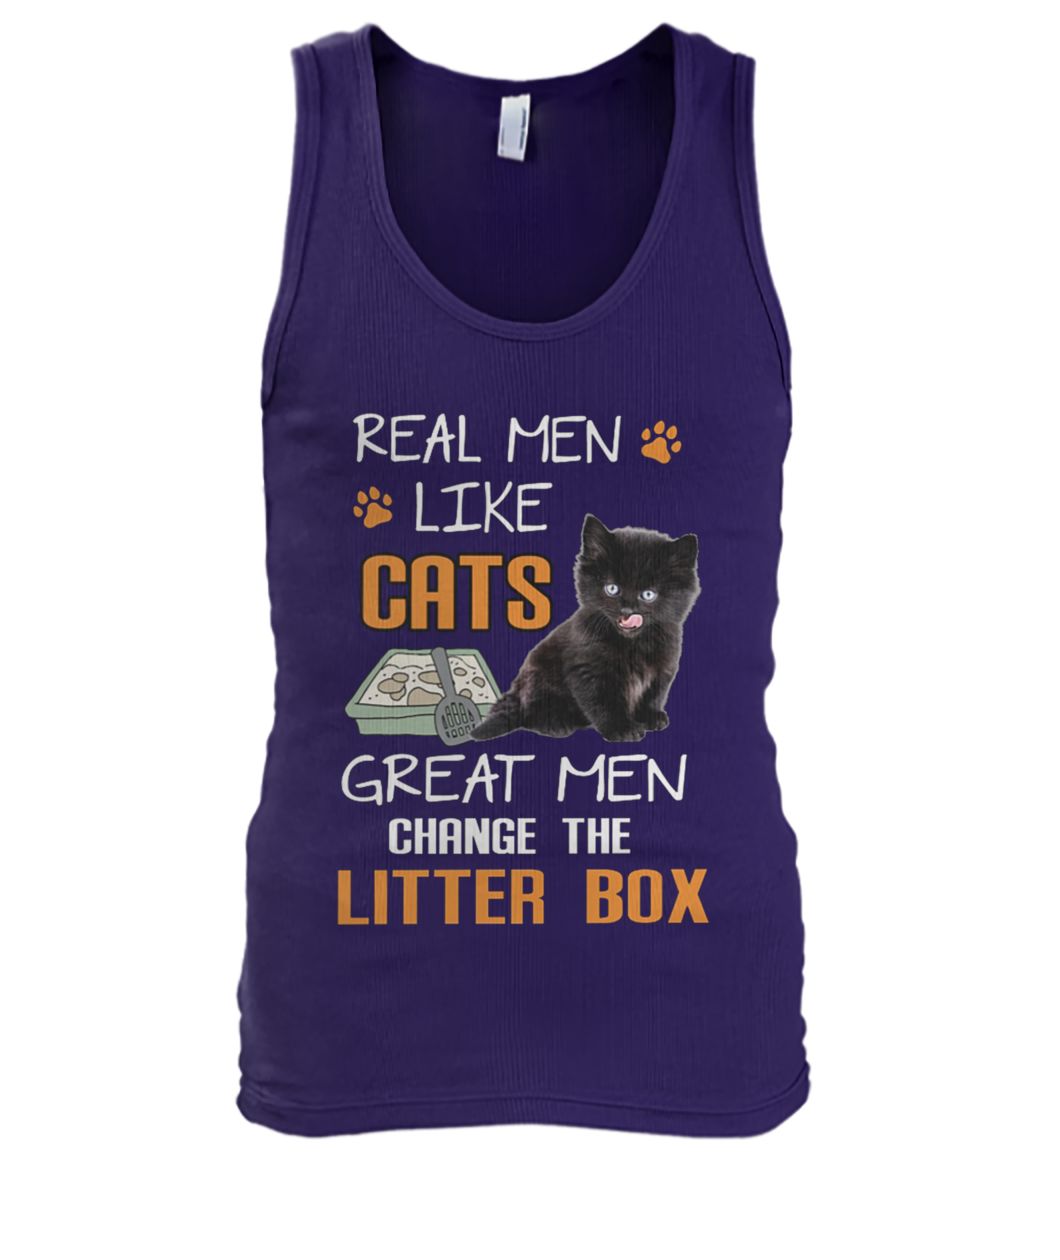 Real men like cats great men change litter box men's tank top